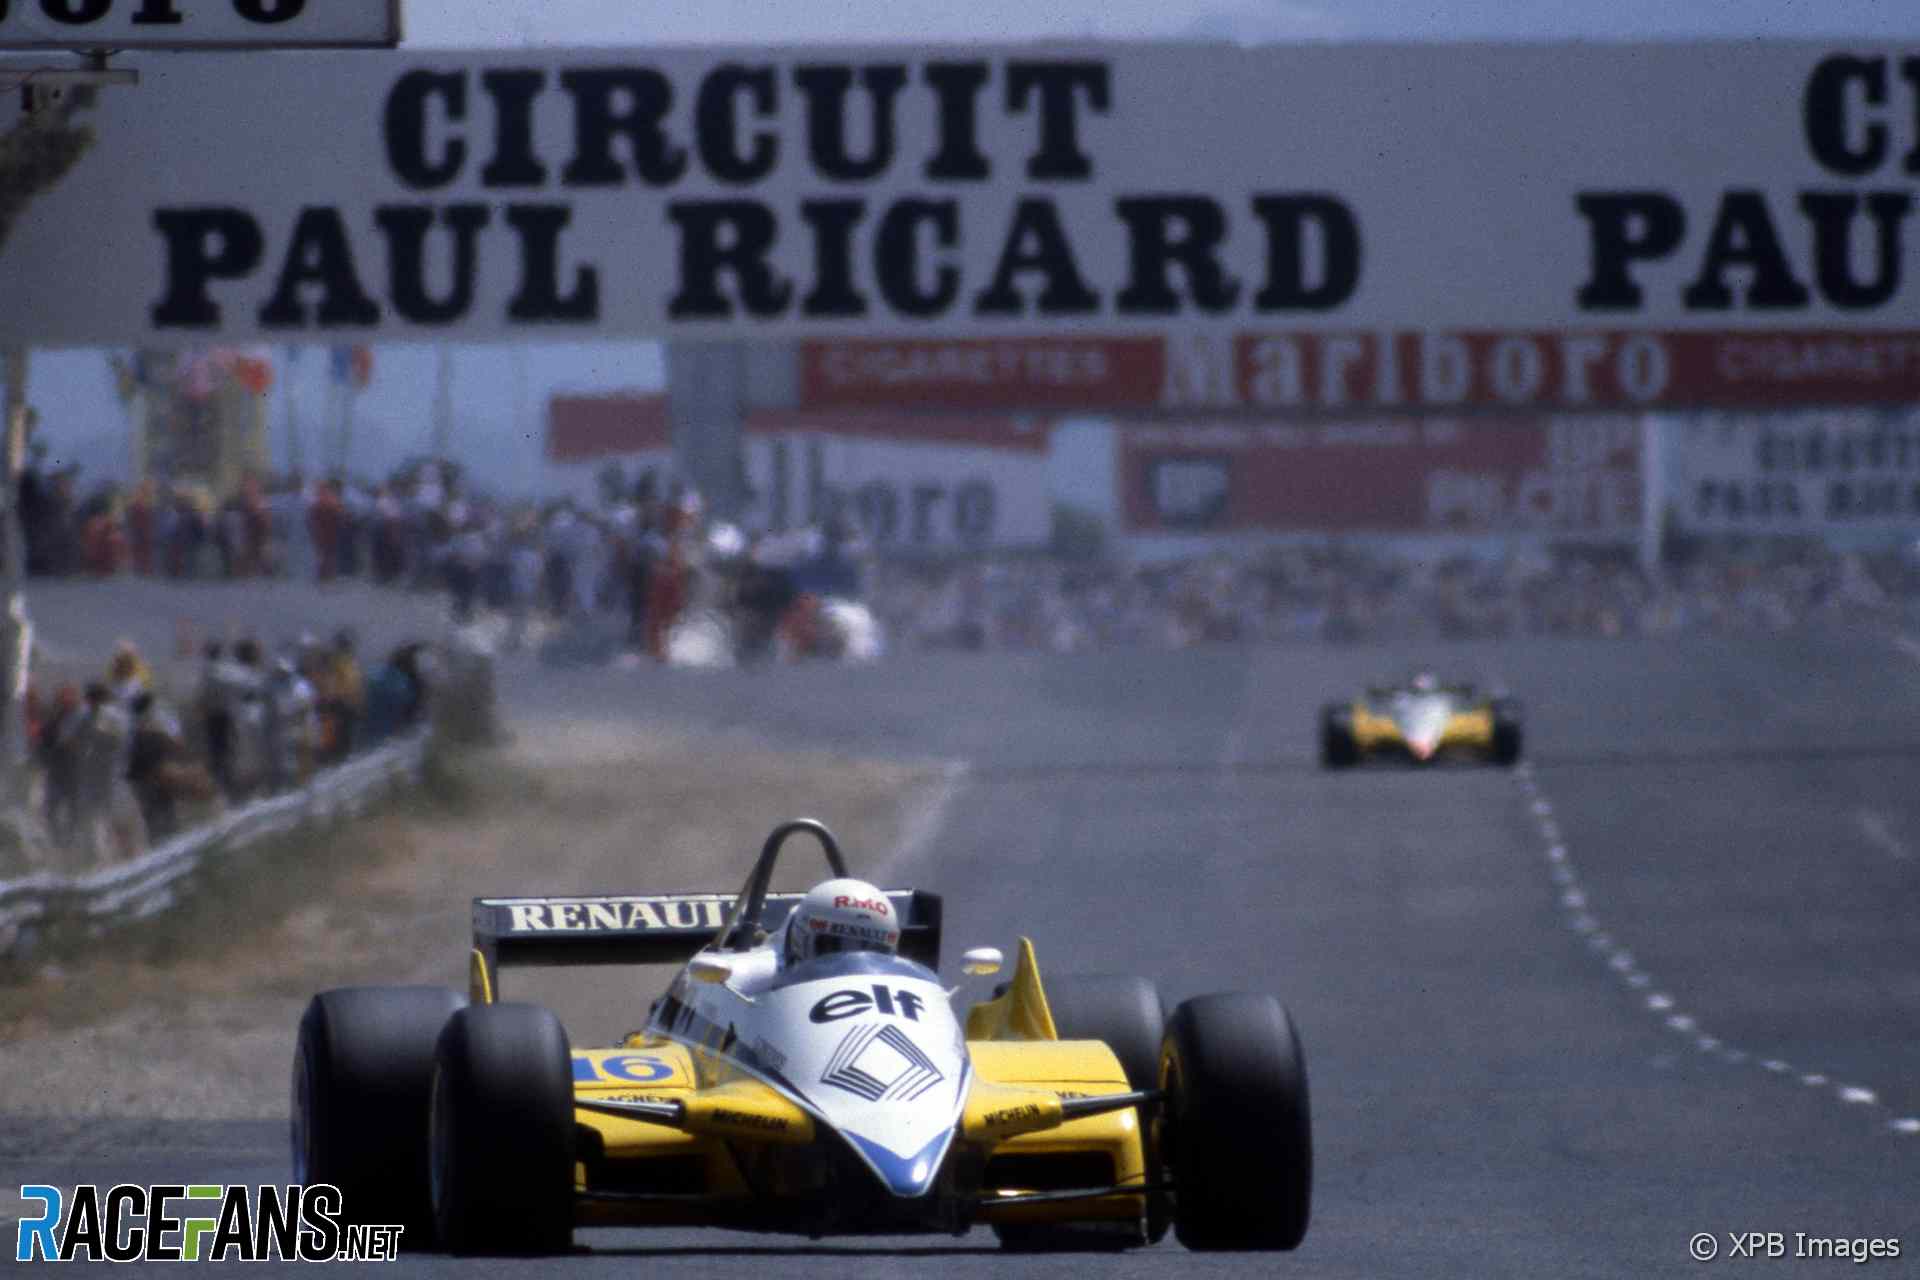 Rene Arnoux, Alain Prost, Renault, Paul Ricard, 1982